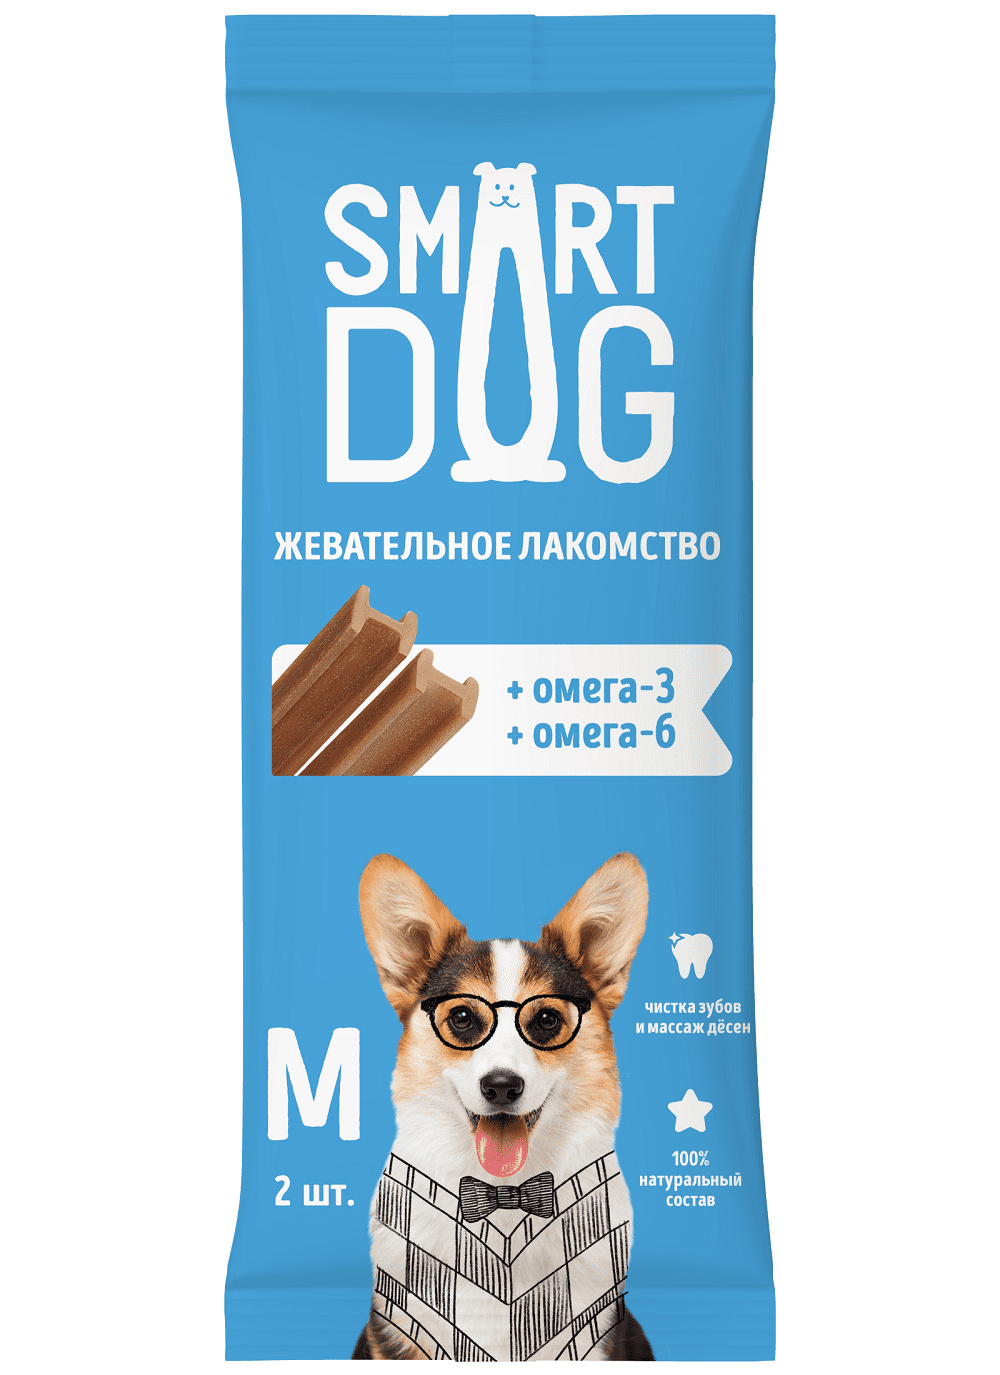 Smart Dog лакомства Smart Dog лакомства жевательное лакомство с омега-3 и -6 для собак и щенков (36 г) smart dog лакомства smart dog лакомства жевательное лакомство с витаминами и минералами для собак и щенков l